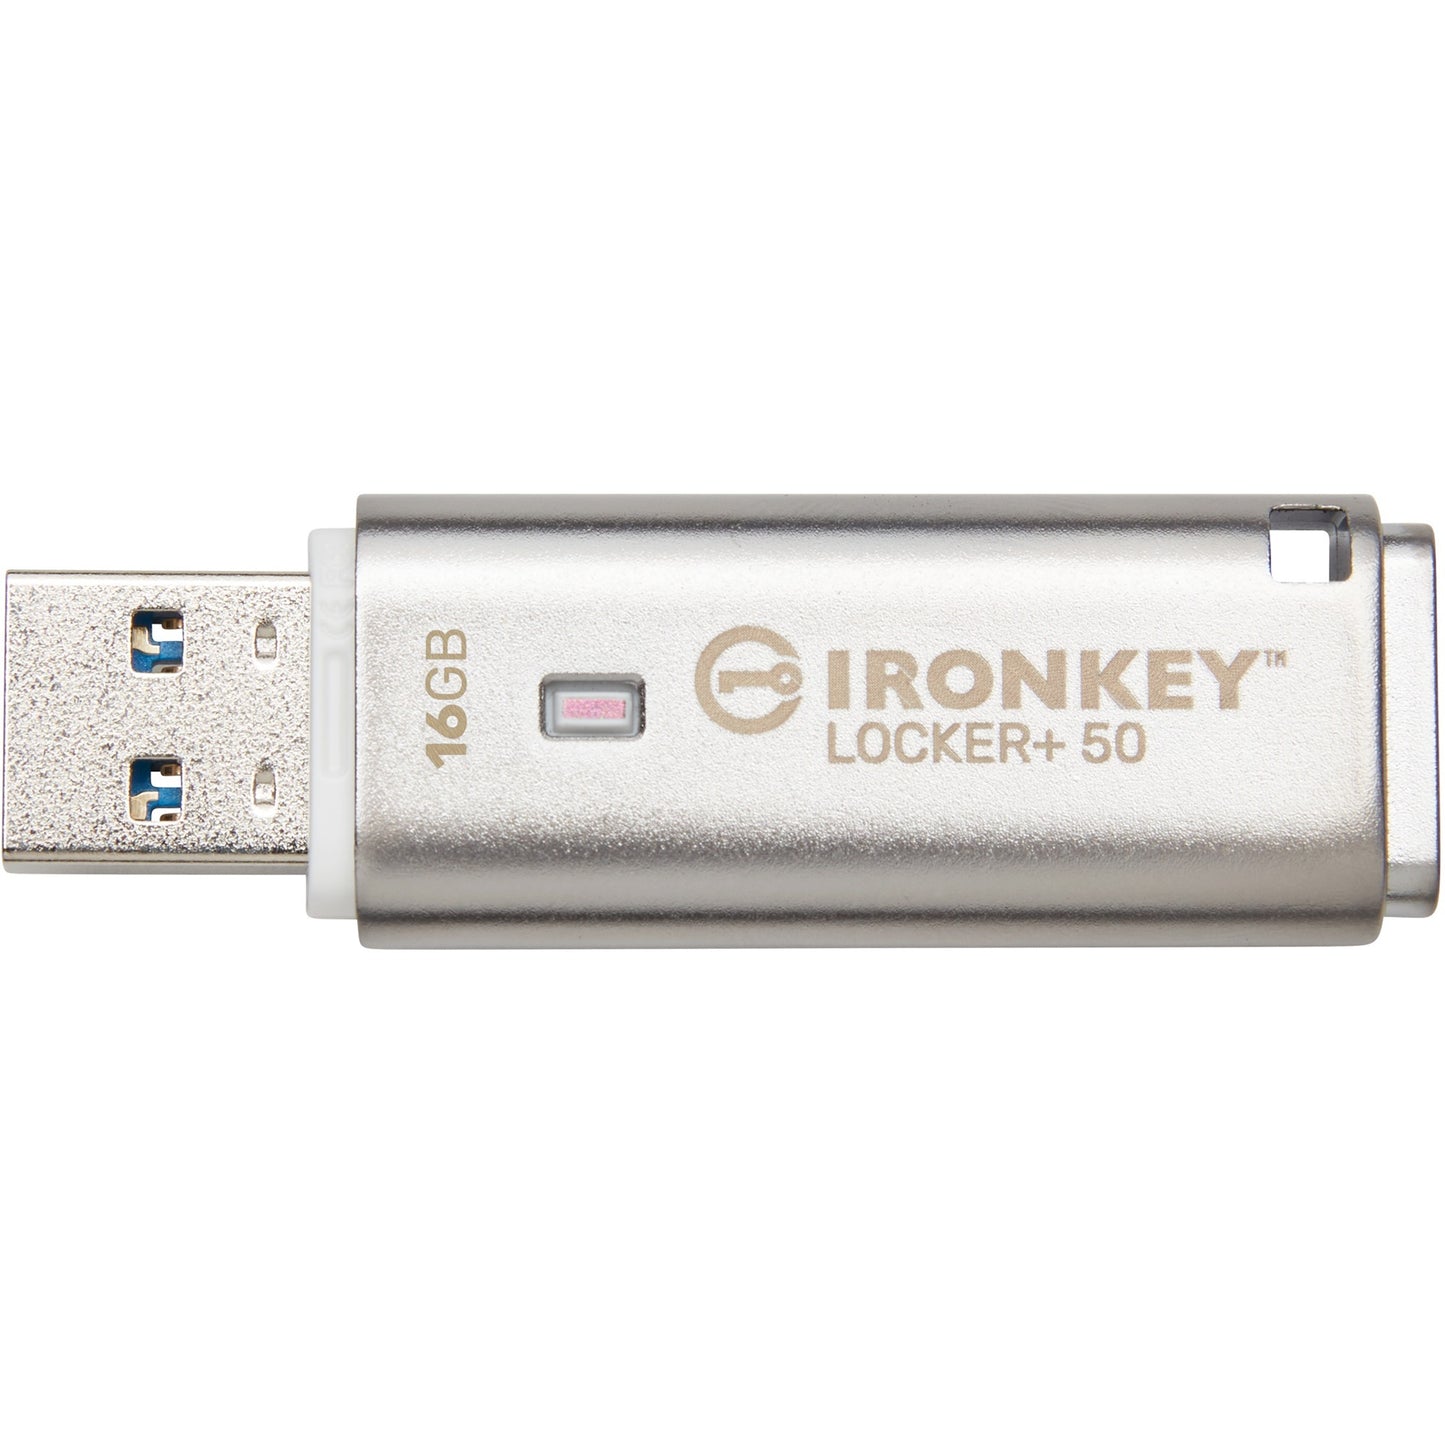 Kingston IronKey Locker+ 50 16 GB